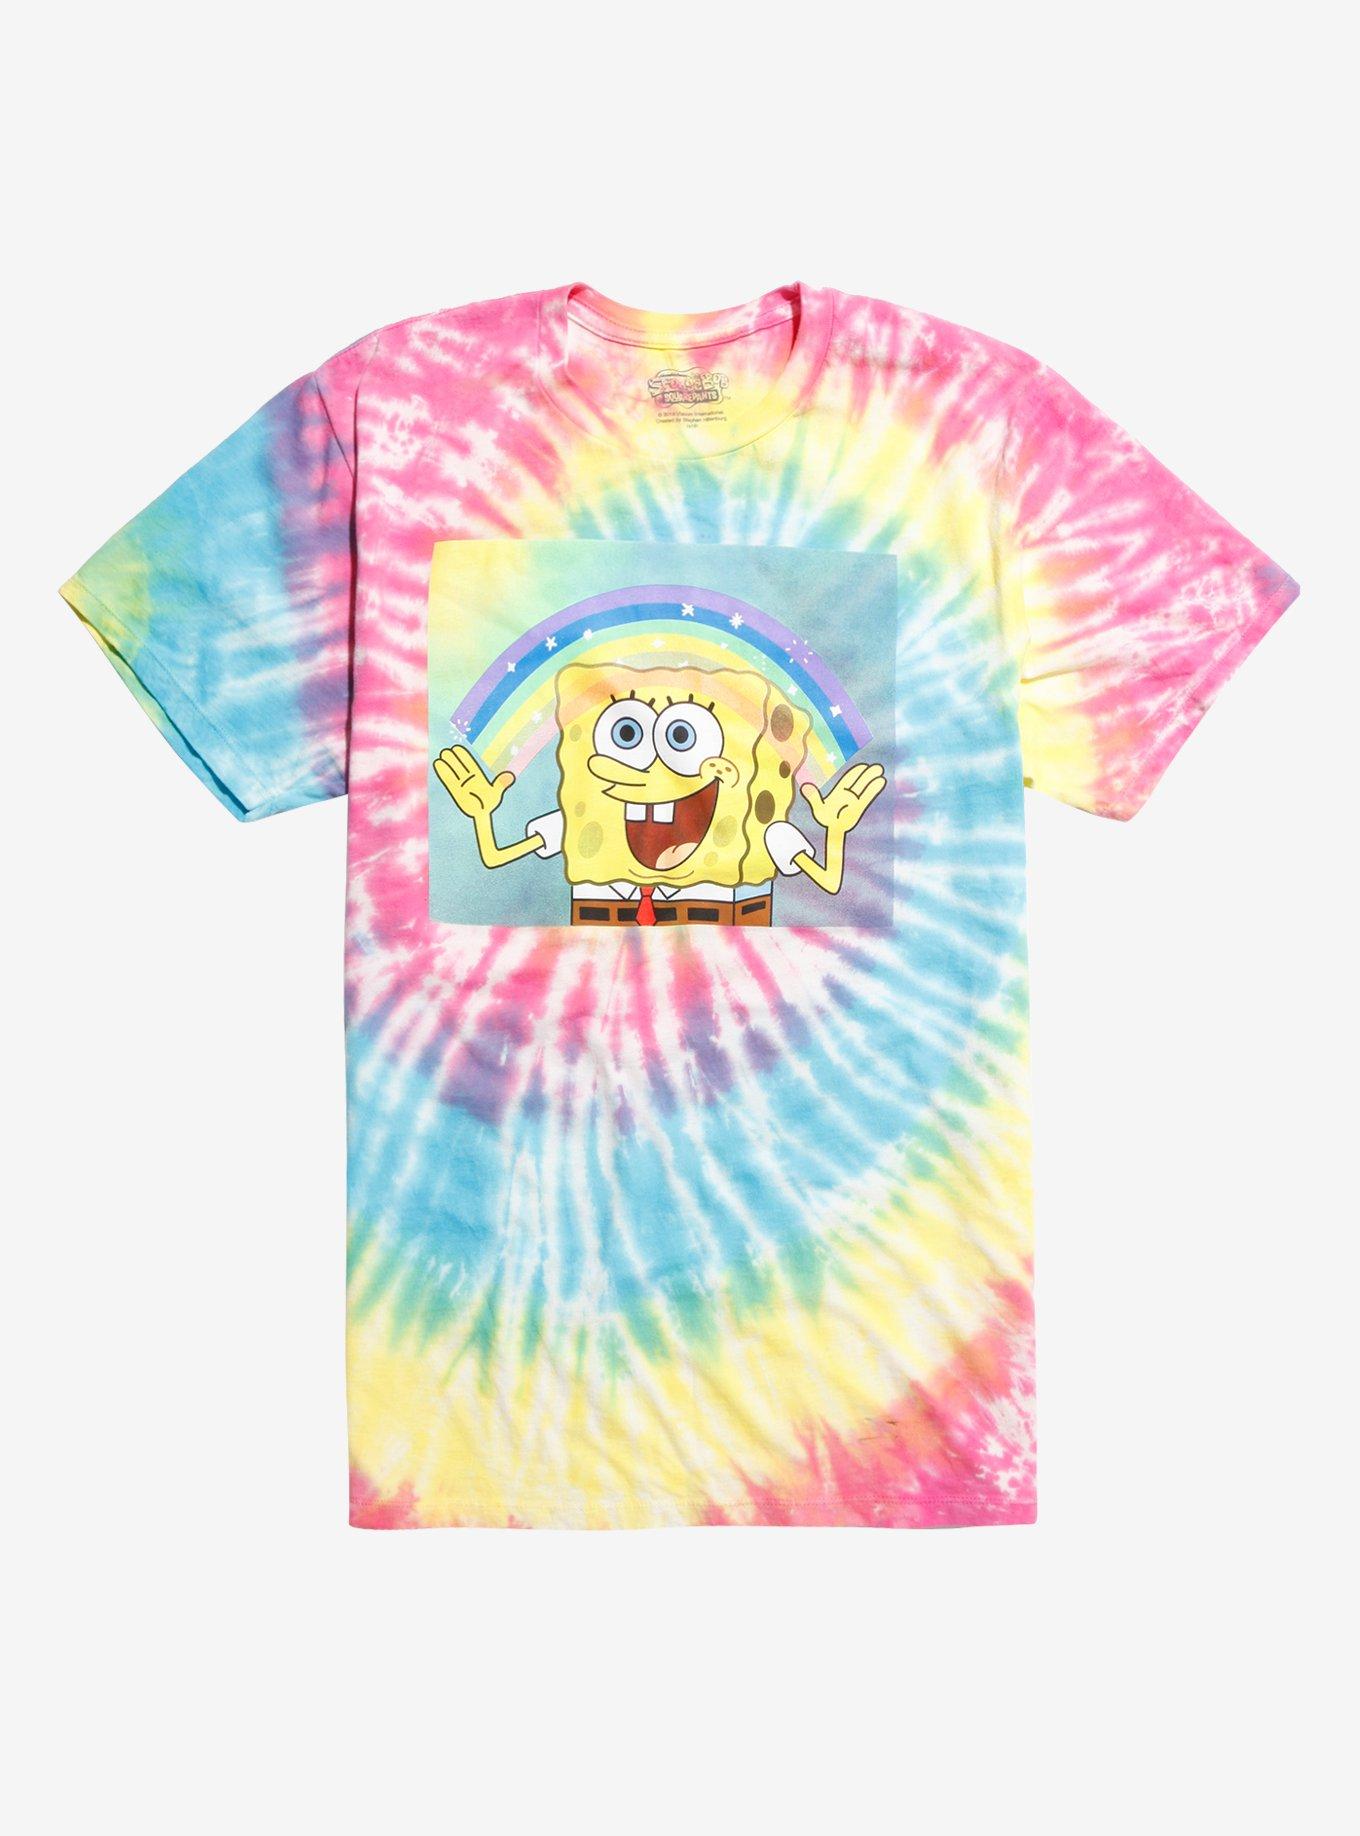 SpongeBob SquarePants Imagination Tie-Dye T-Shirt | Hot Topic